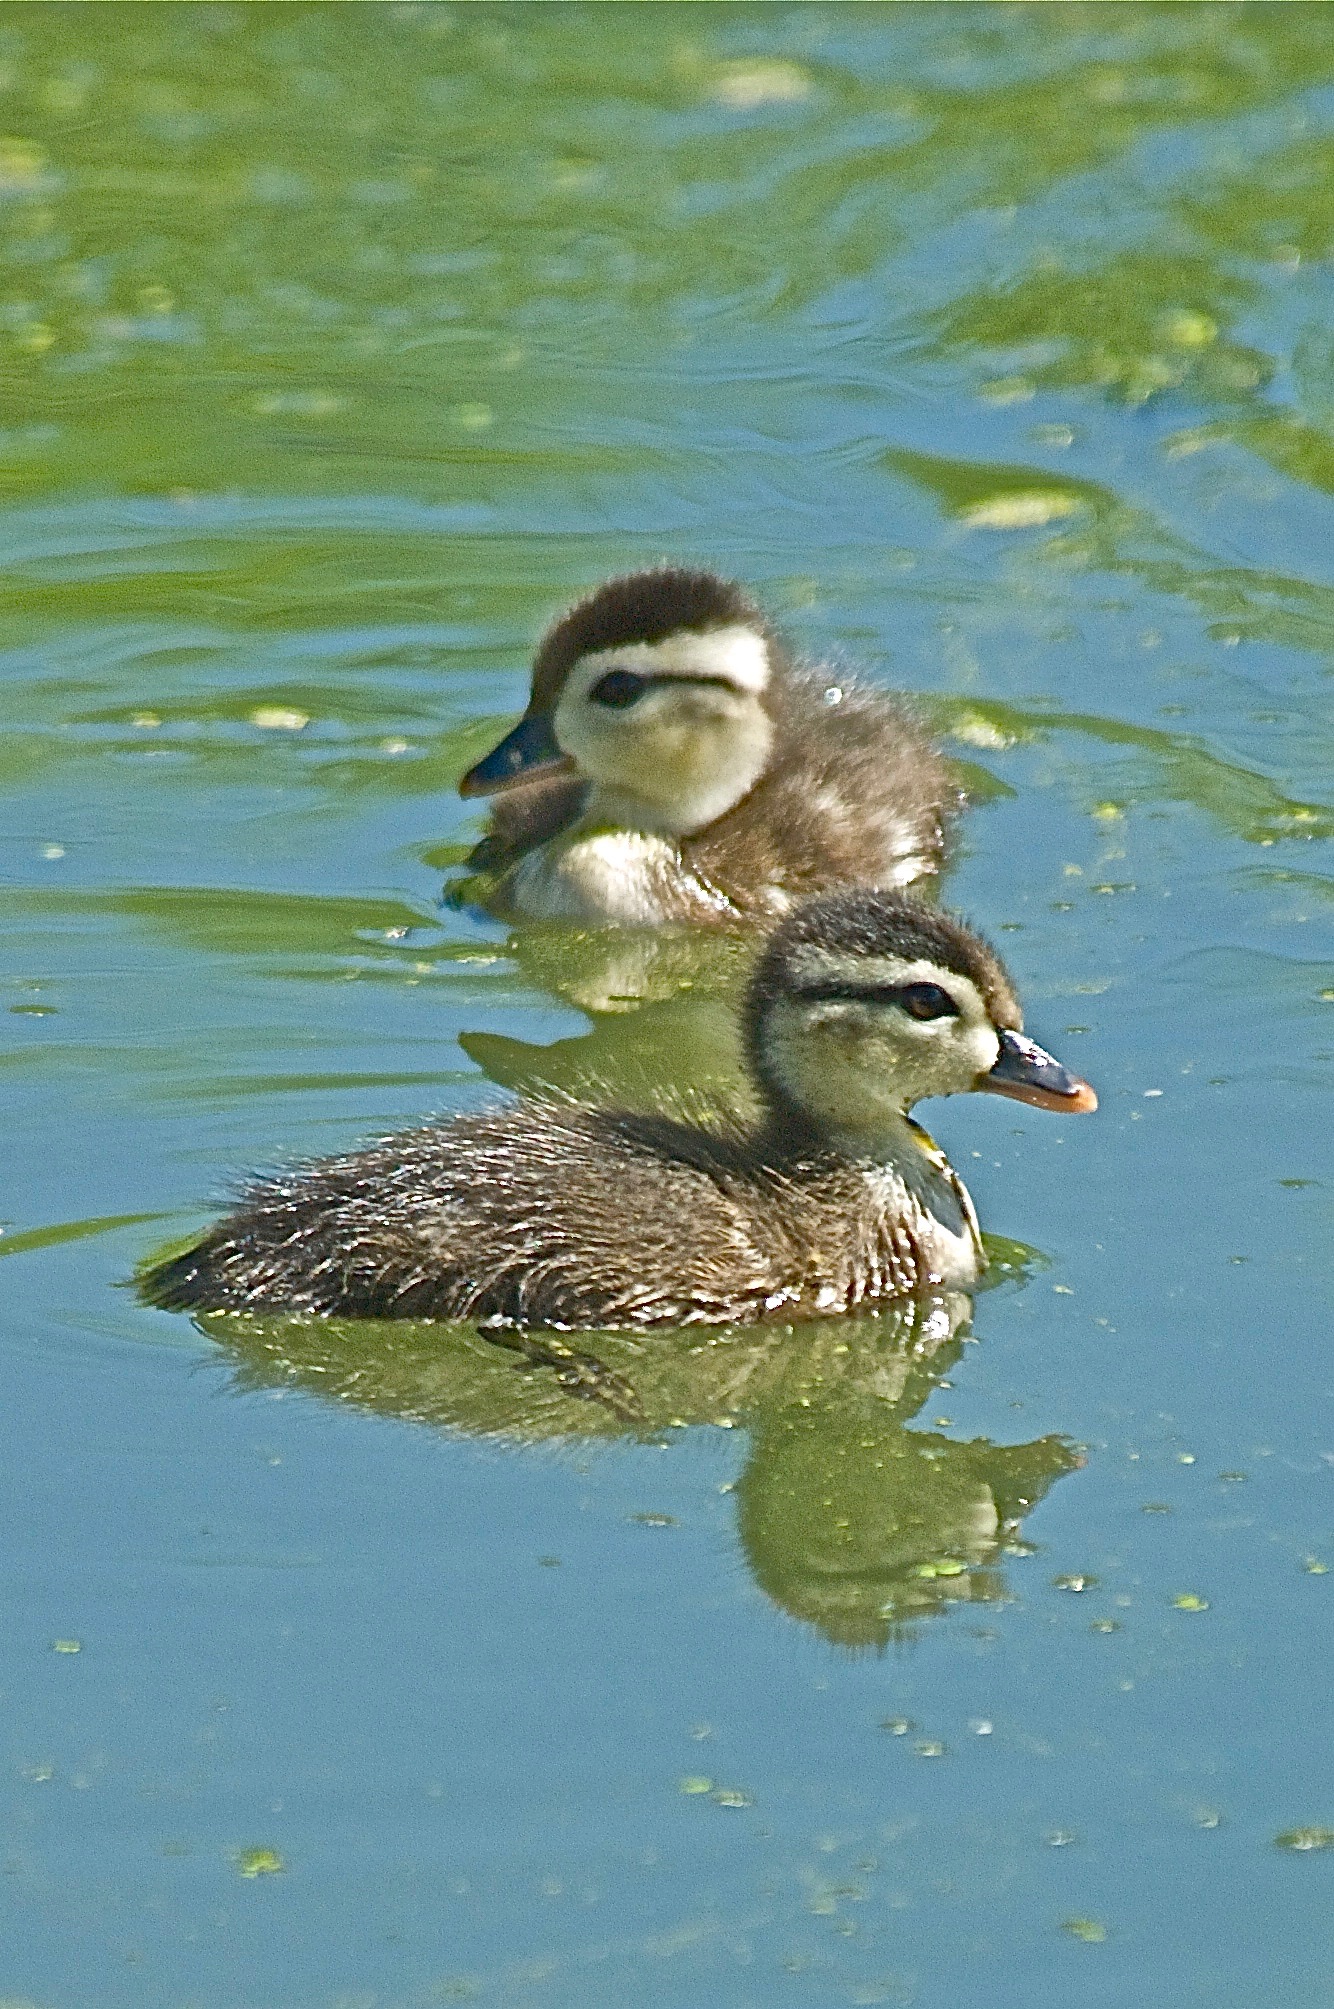 Baby Wood Ducks